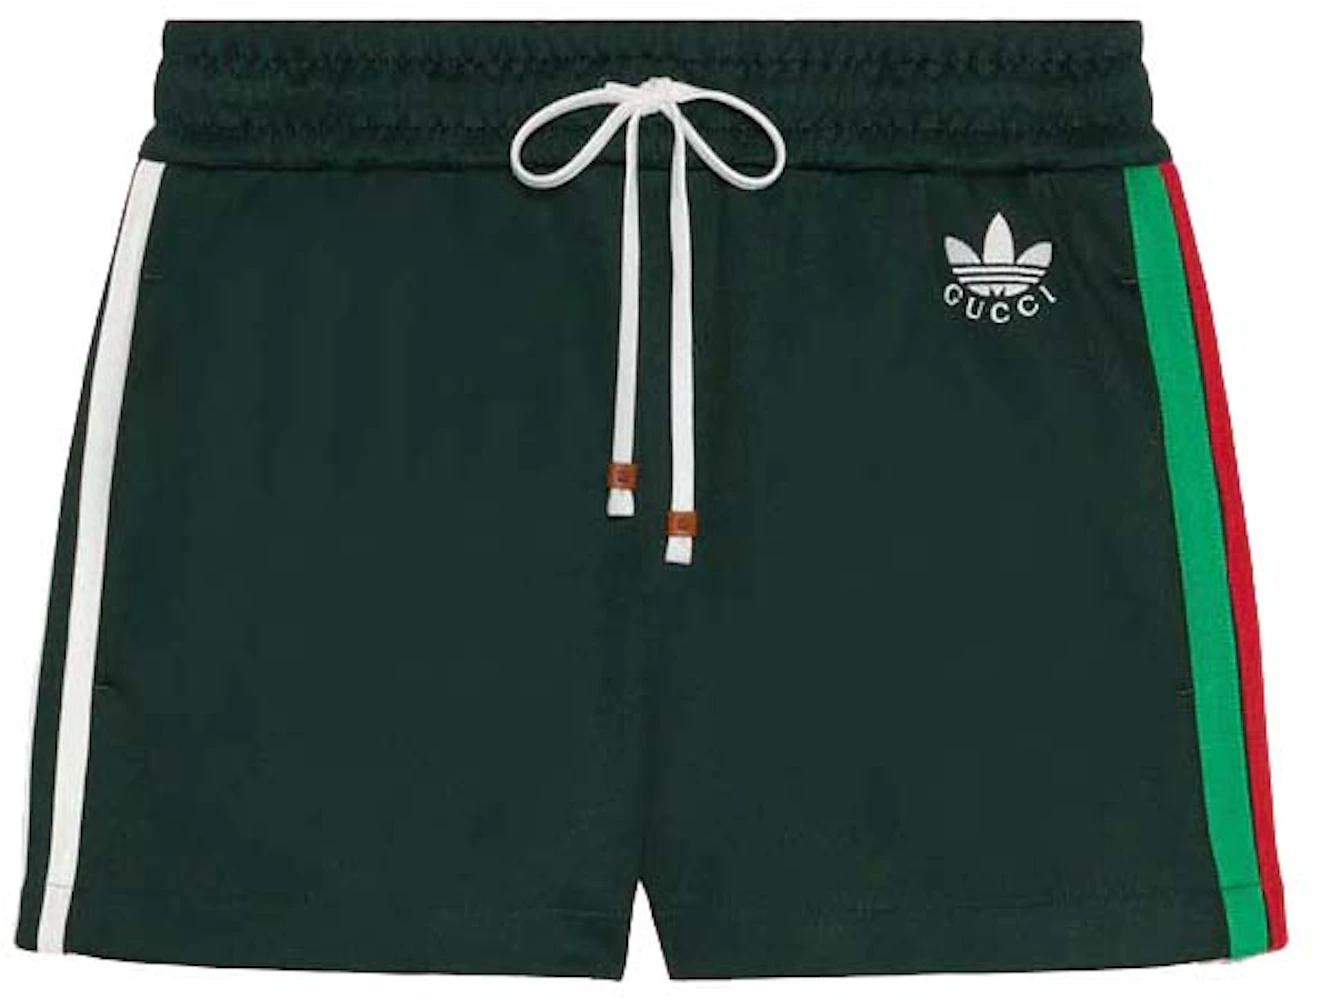 Gucci x adidas Jersey - Green Dark SS22 - US Shorts